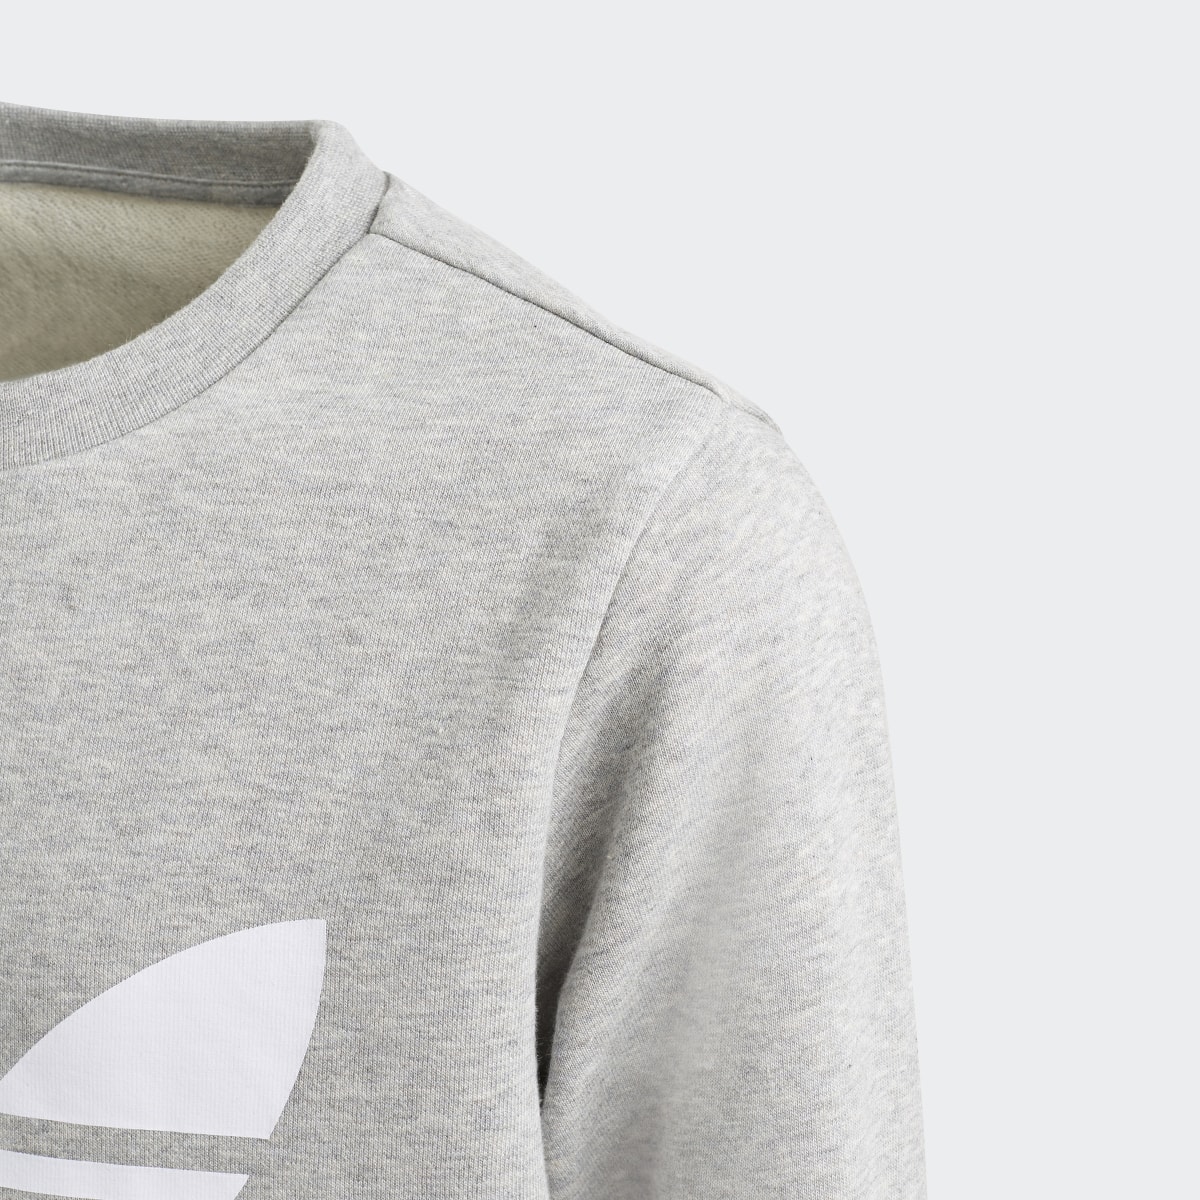 Adidas Sweatshirt Trefoil. 5